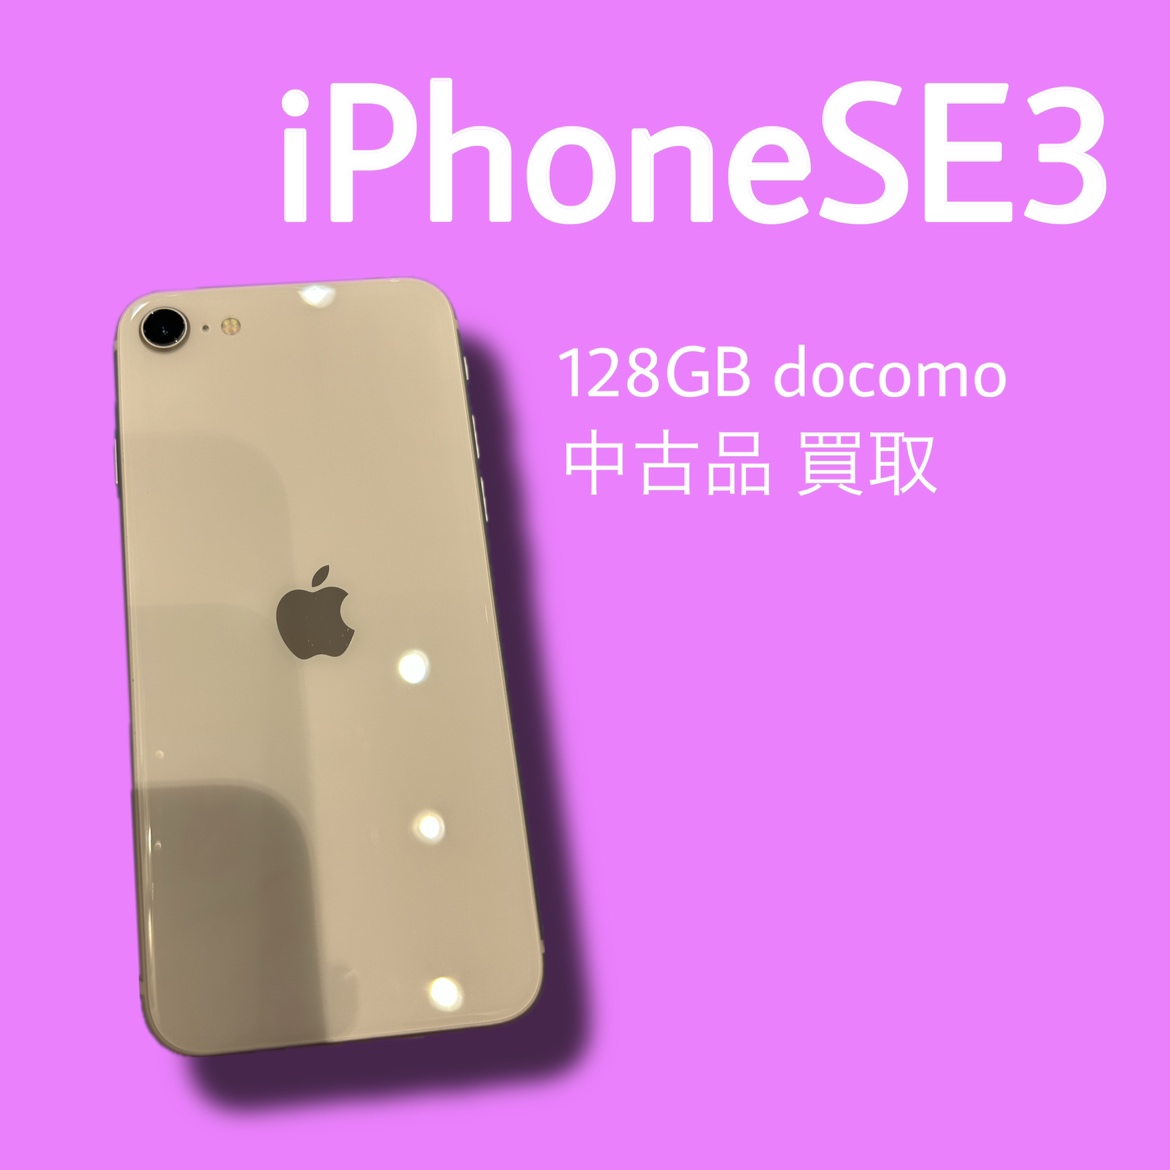 iPhoneSE3・128GB・docomo・ネット制限〇【天神地下街店】